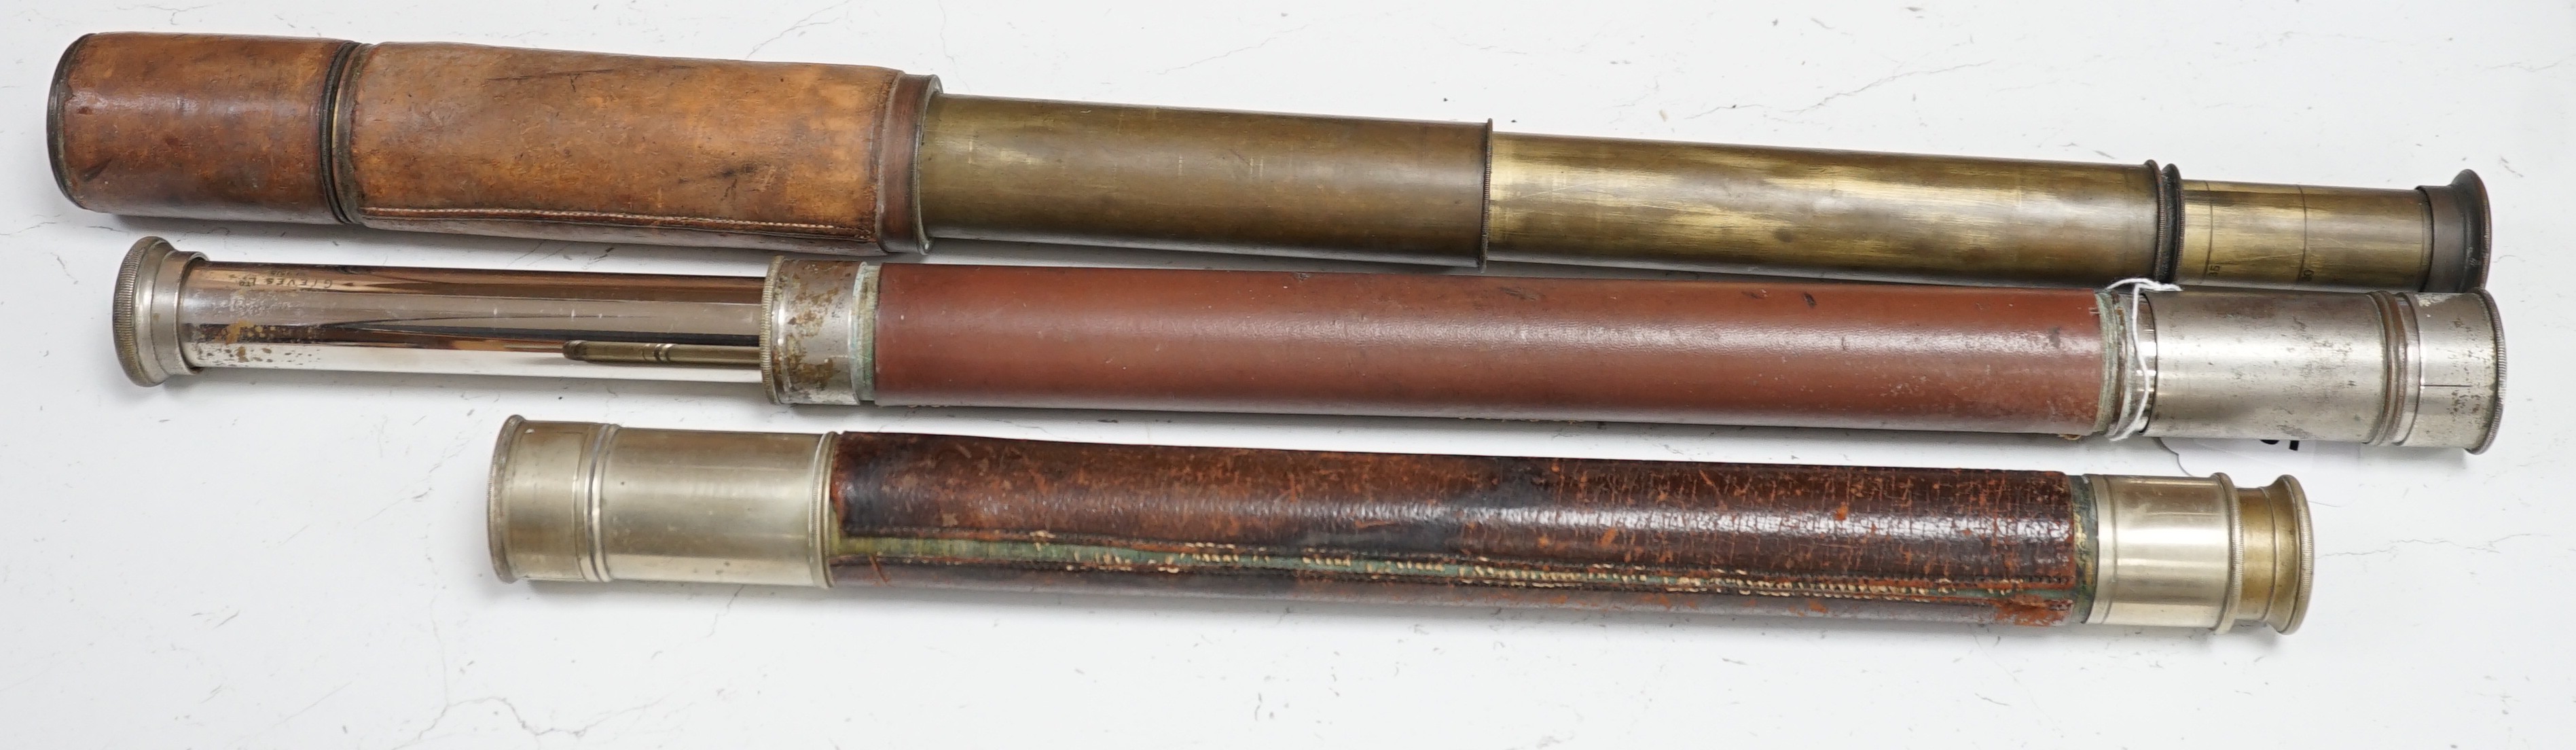 Three leather bound telescopes